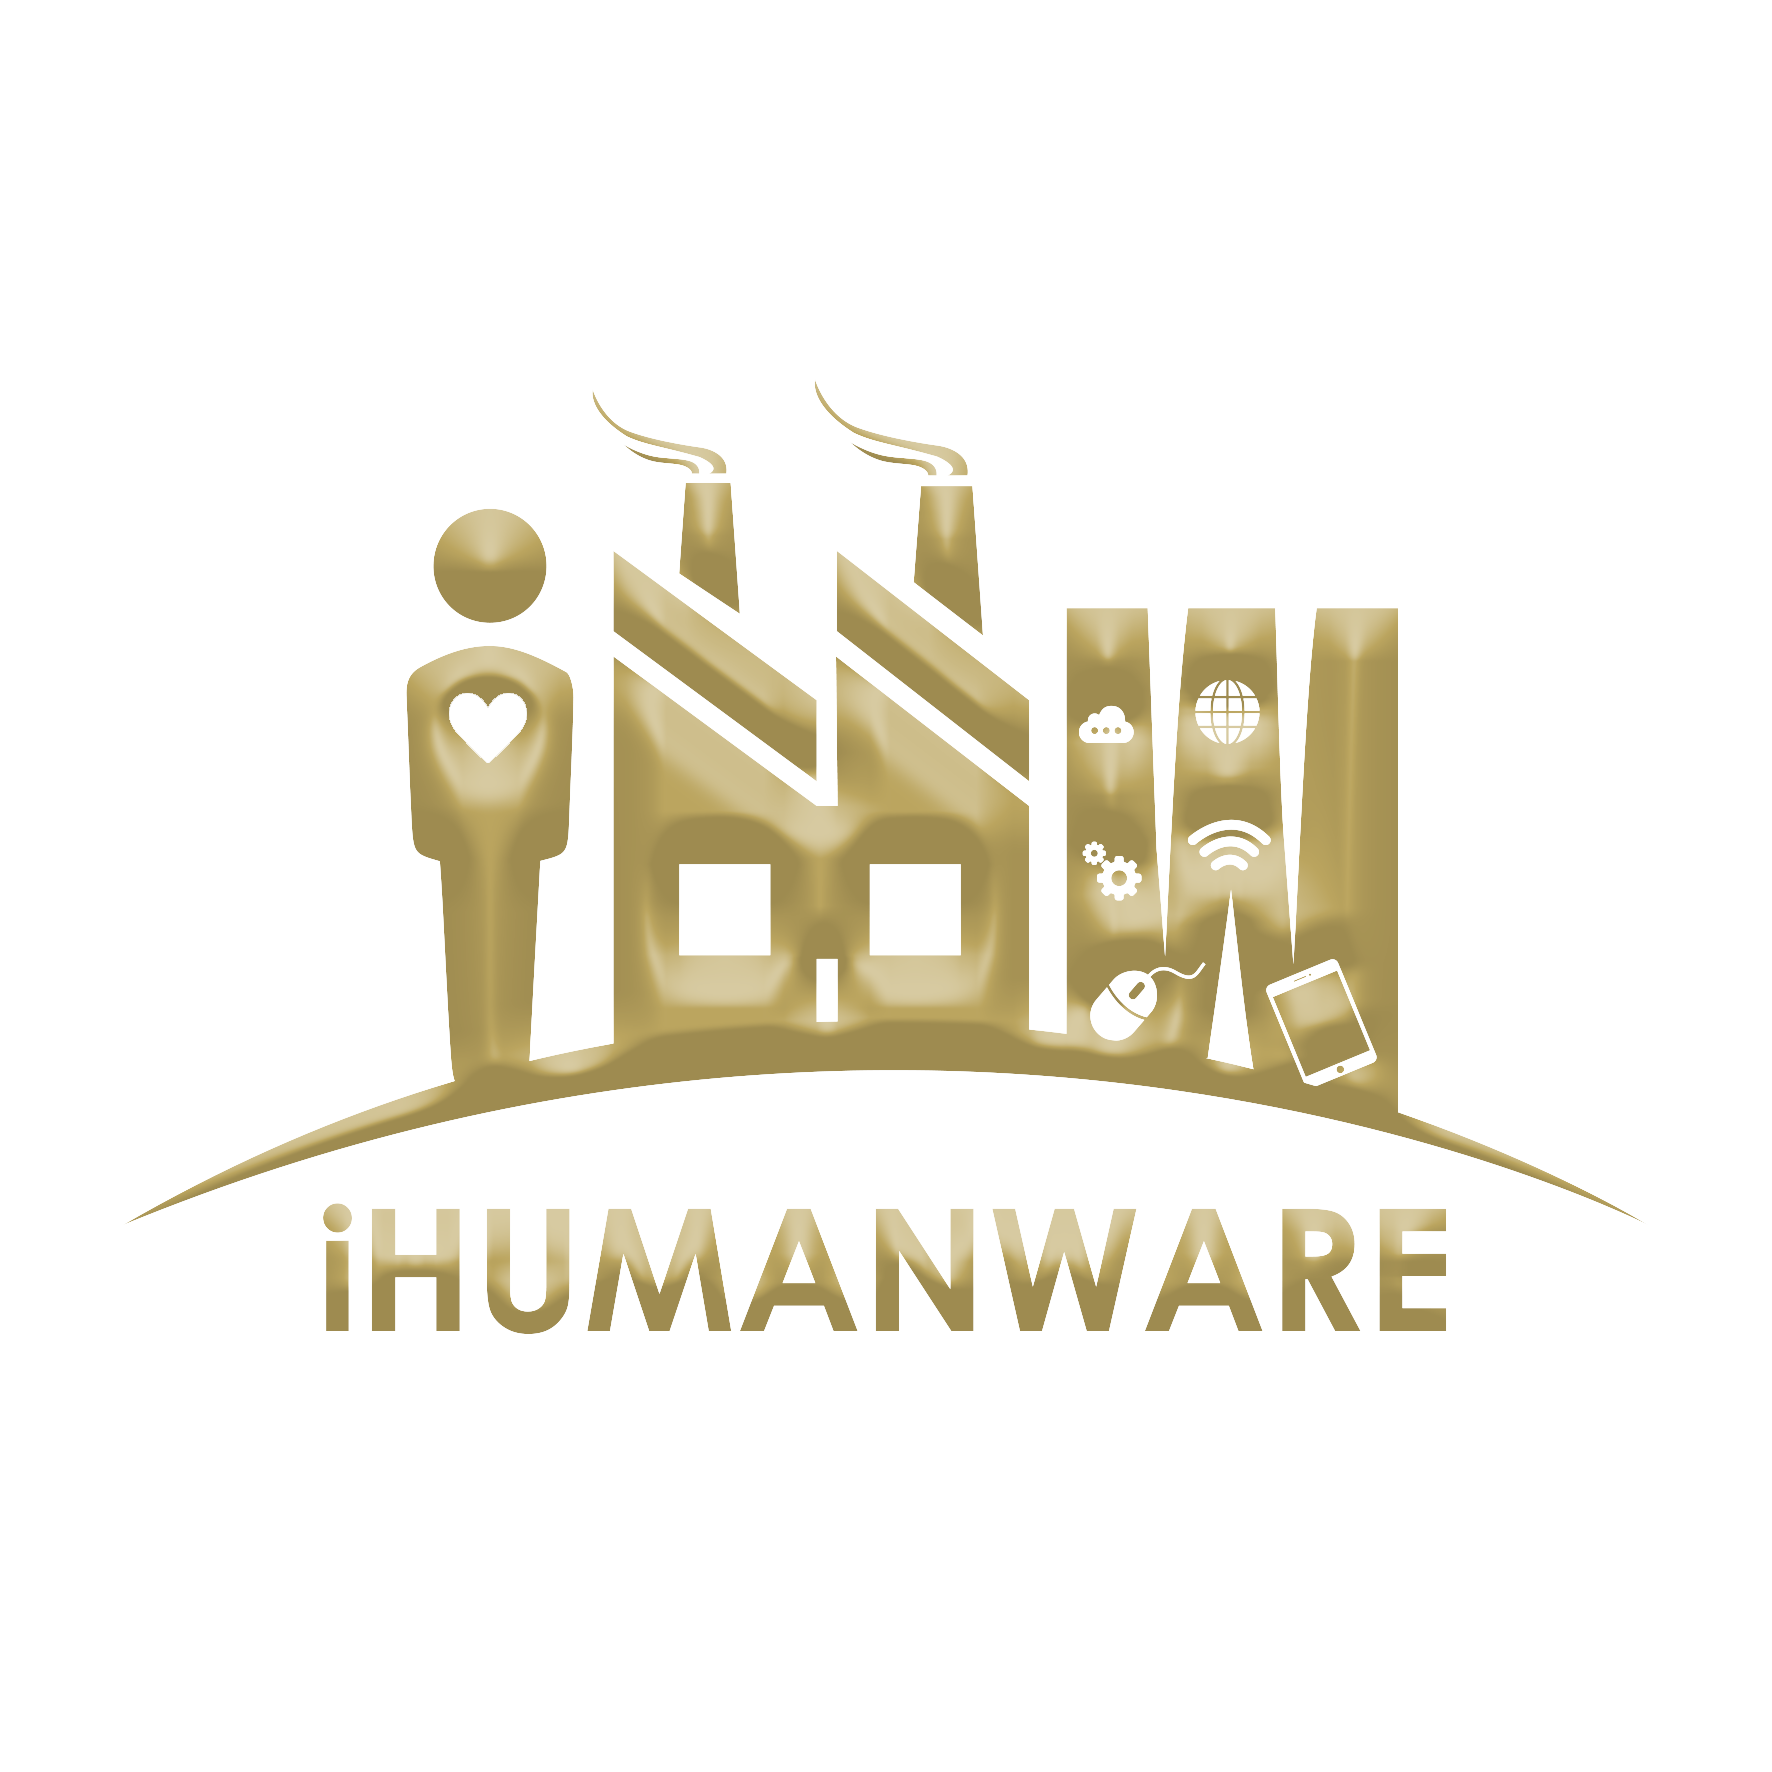 IHumanware